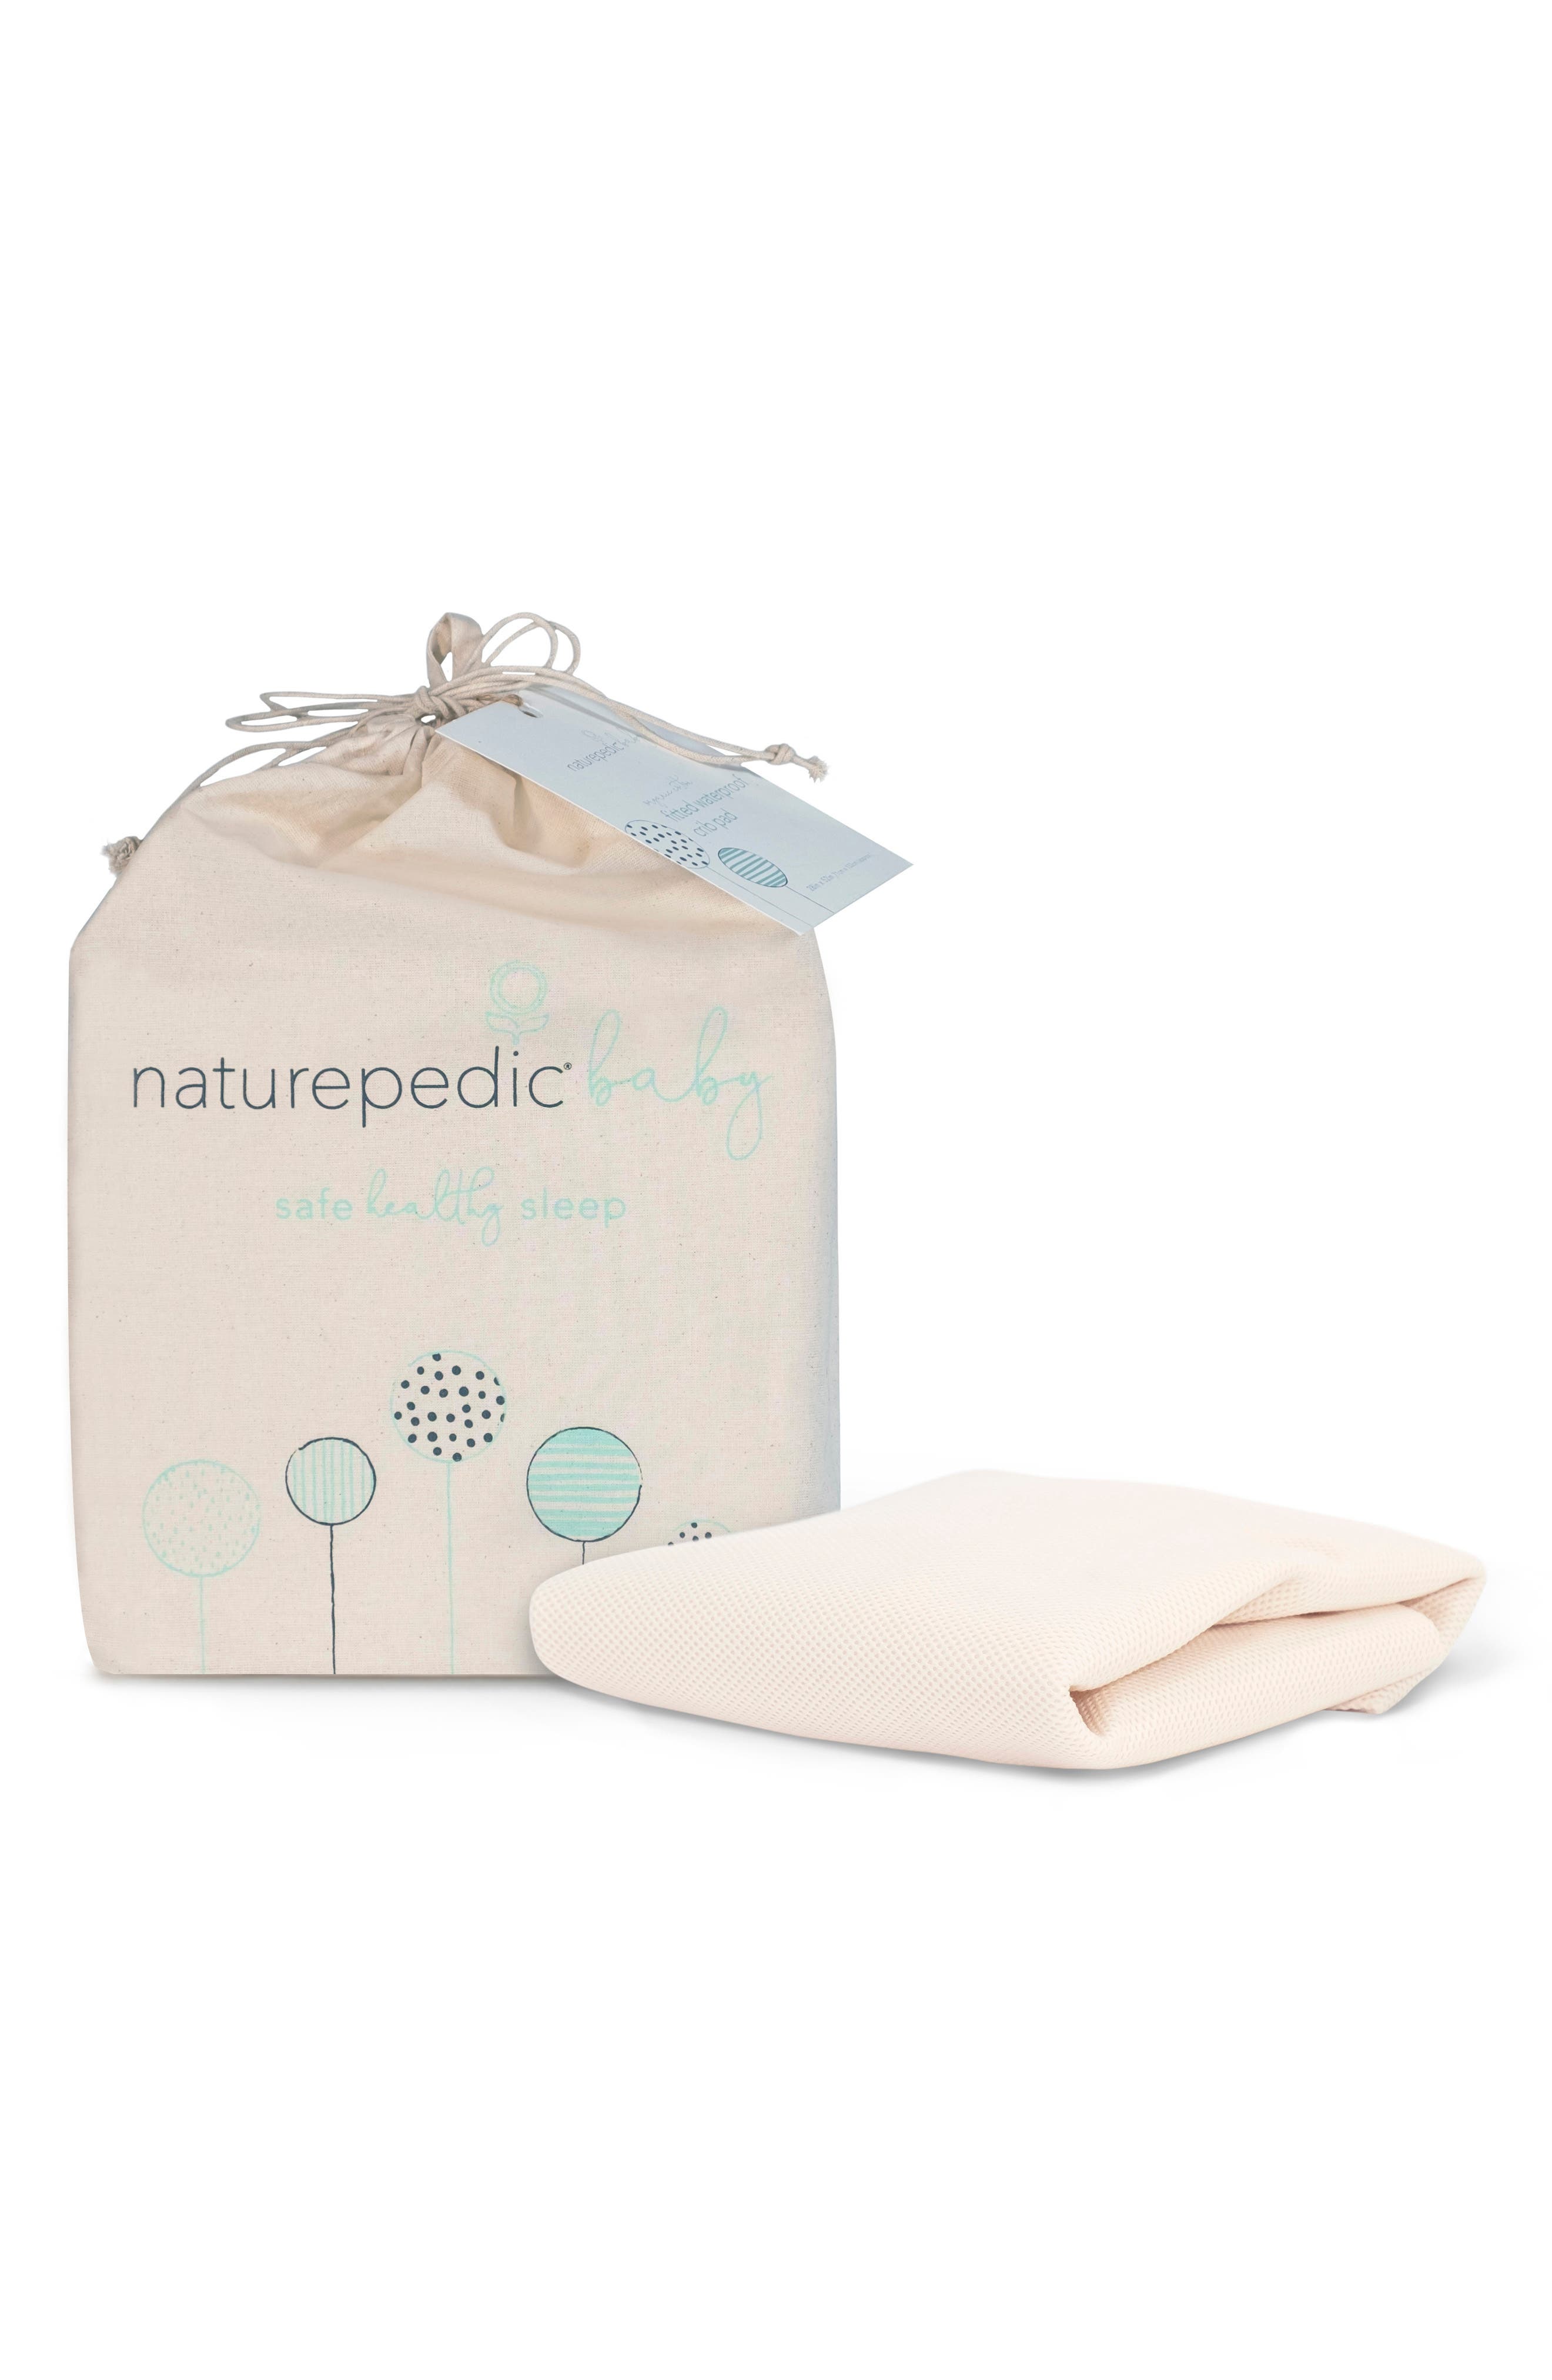 naturepedic waterproof fitted crib pad